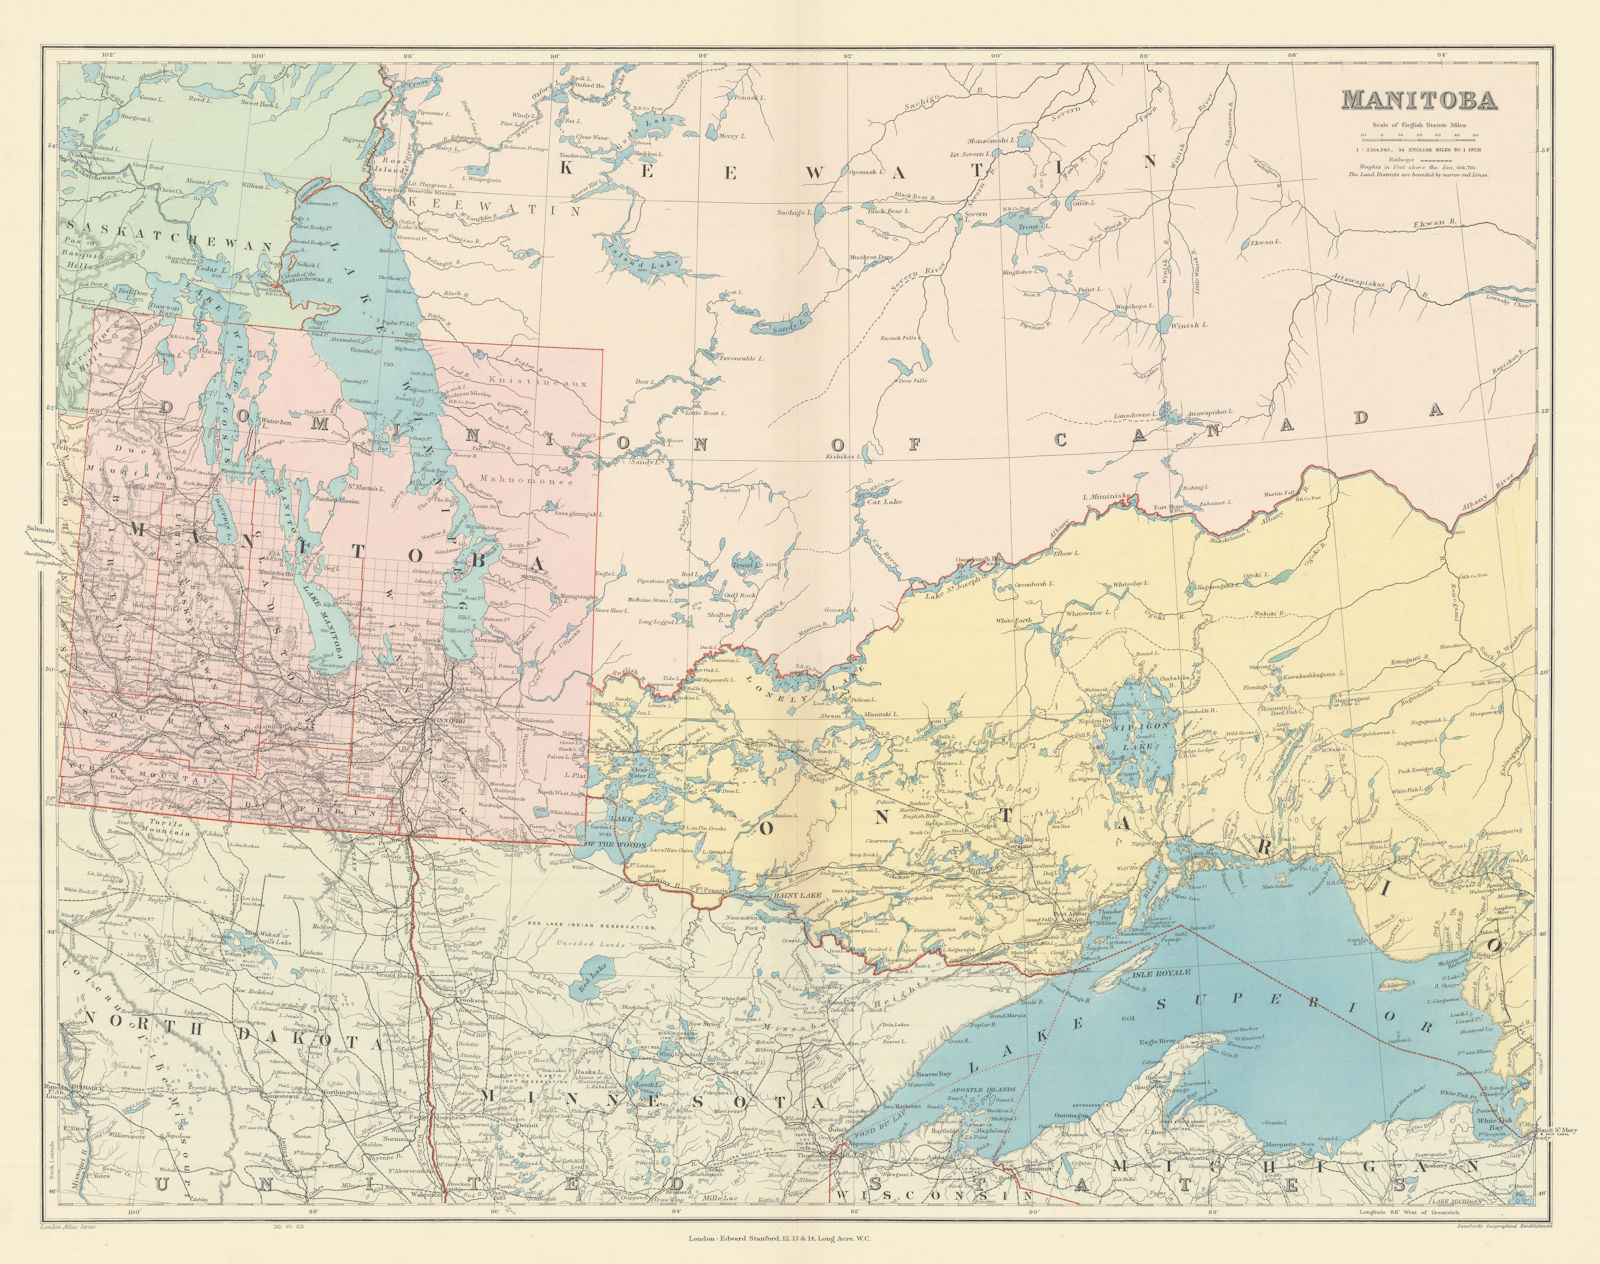 Manitoba. West Ontario, Lake Superior & Winnipeg. Canada. STANFORD 1904 map